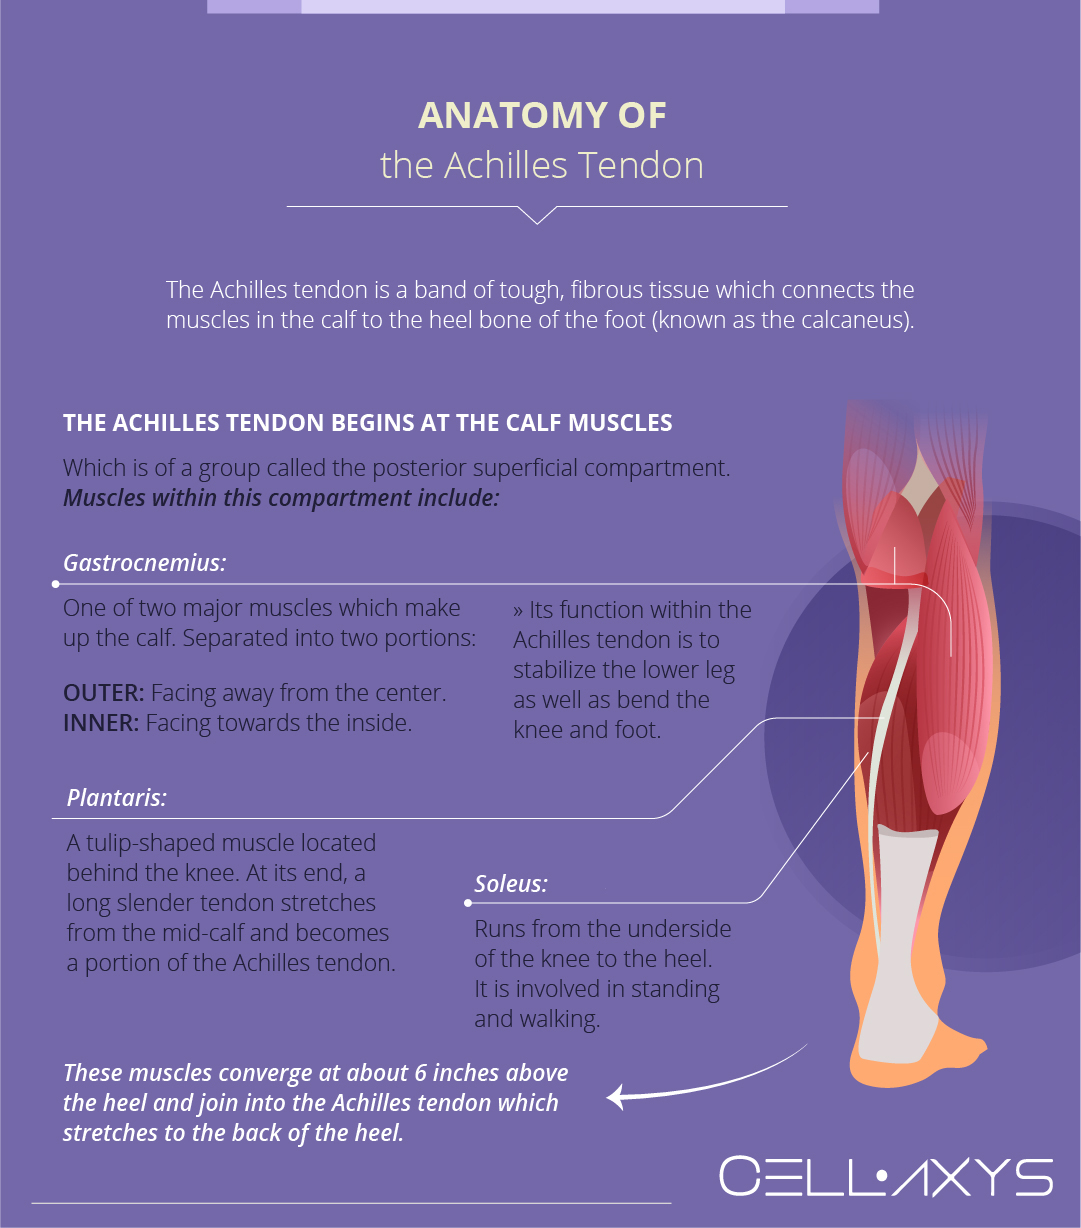 Anatomy of the Achilles Tendon